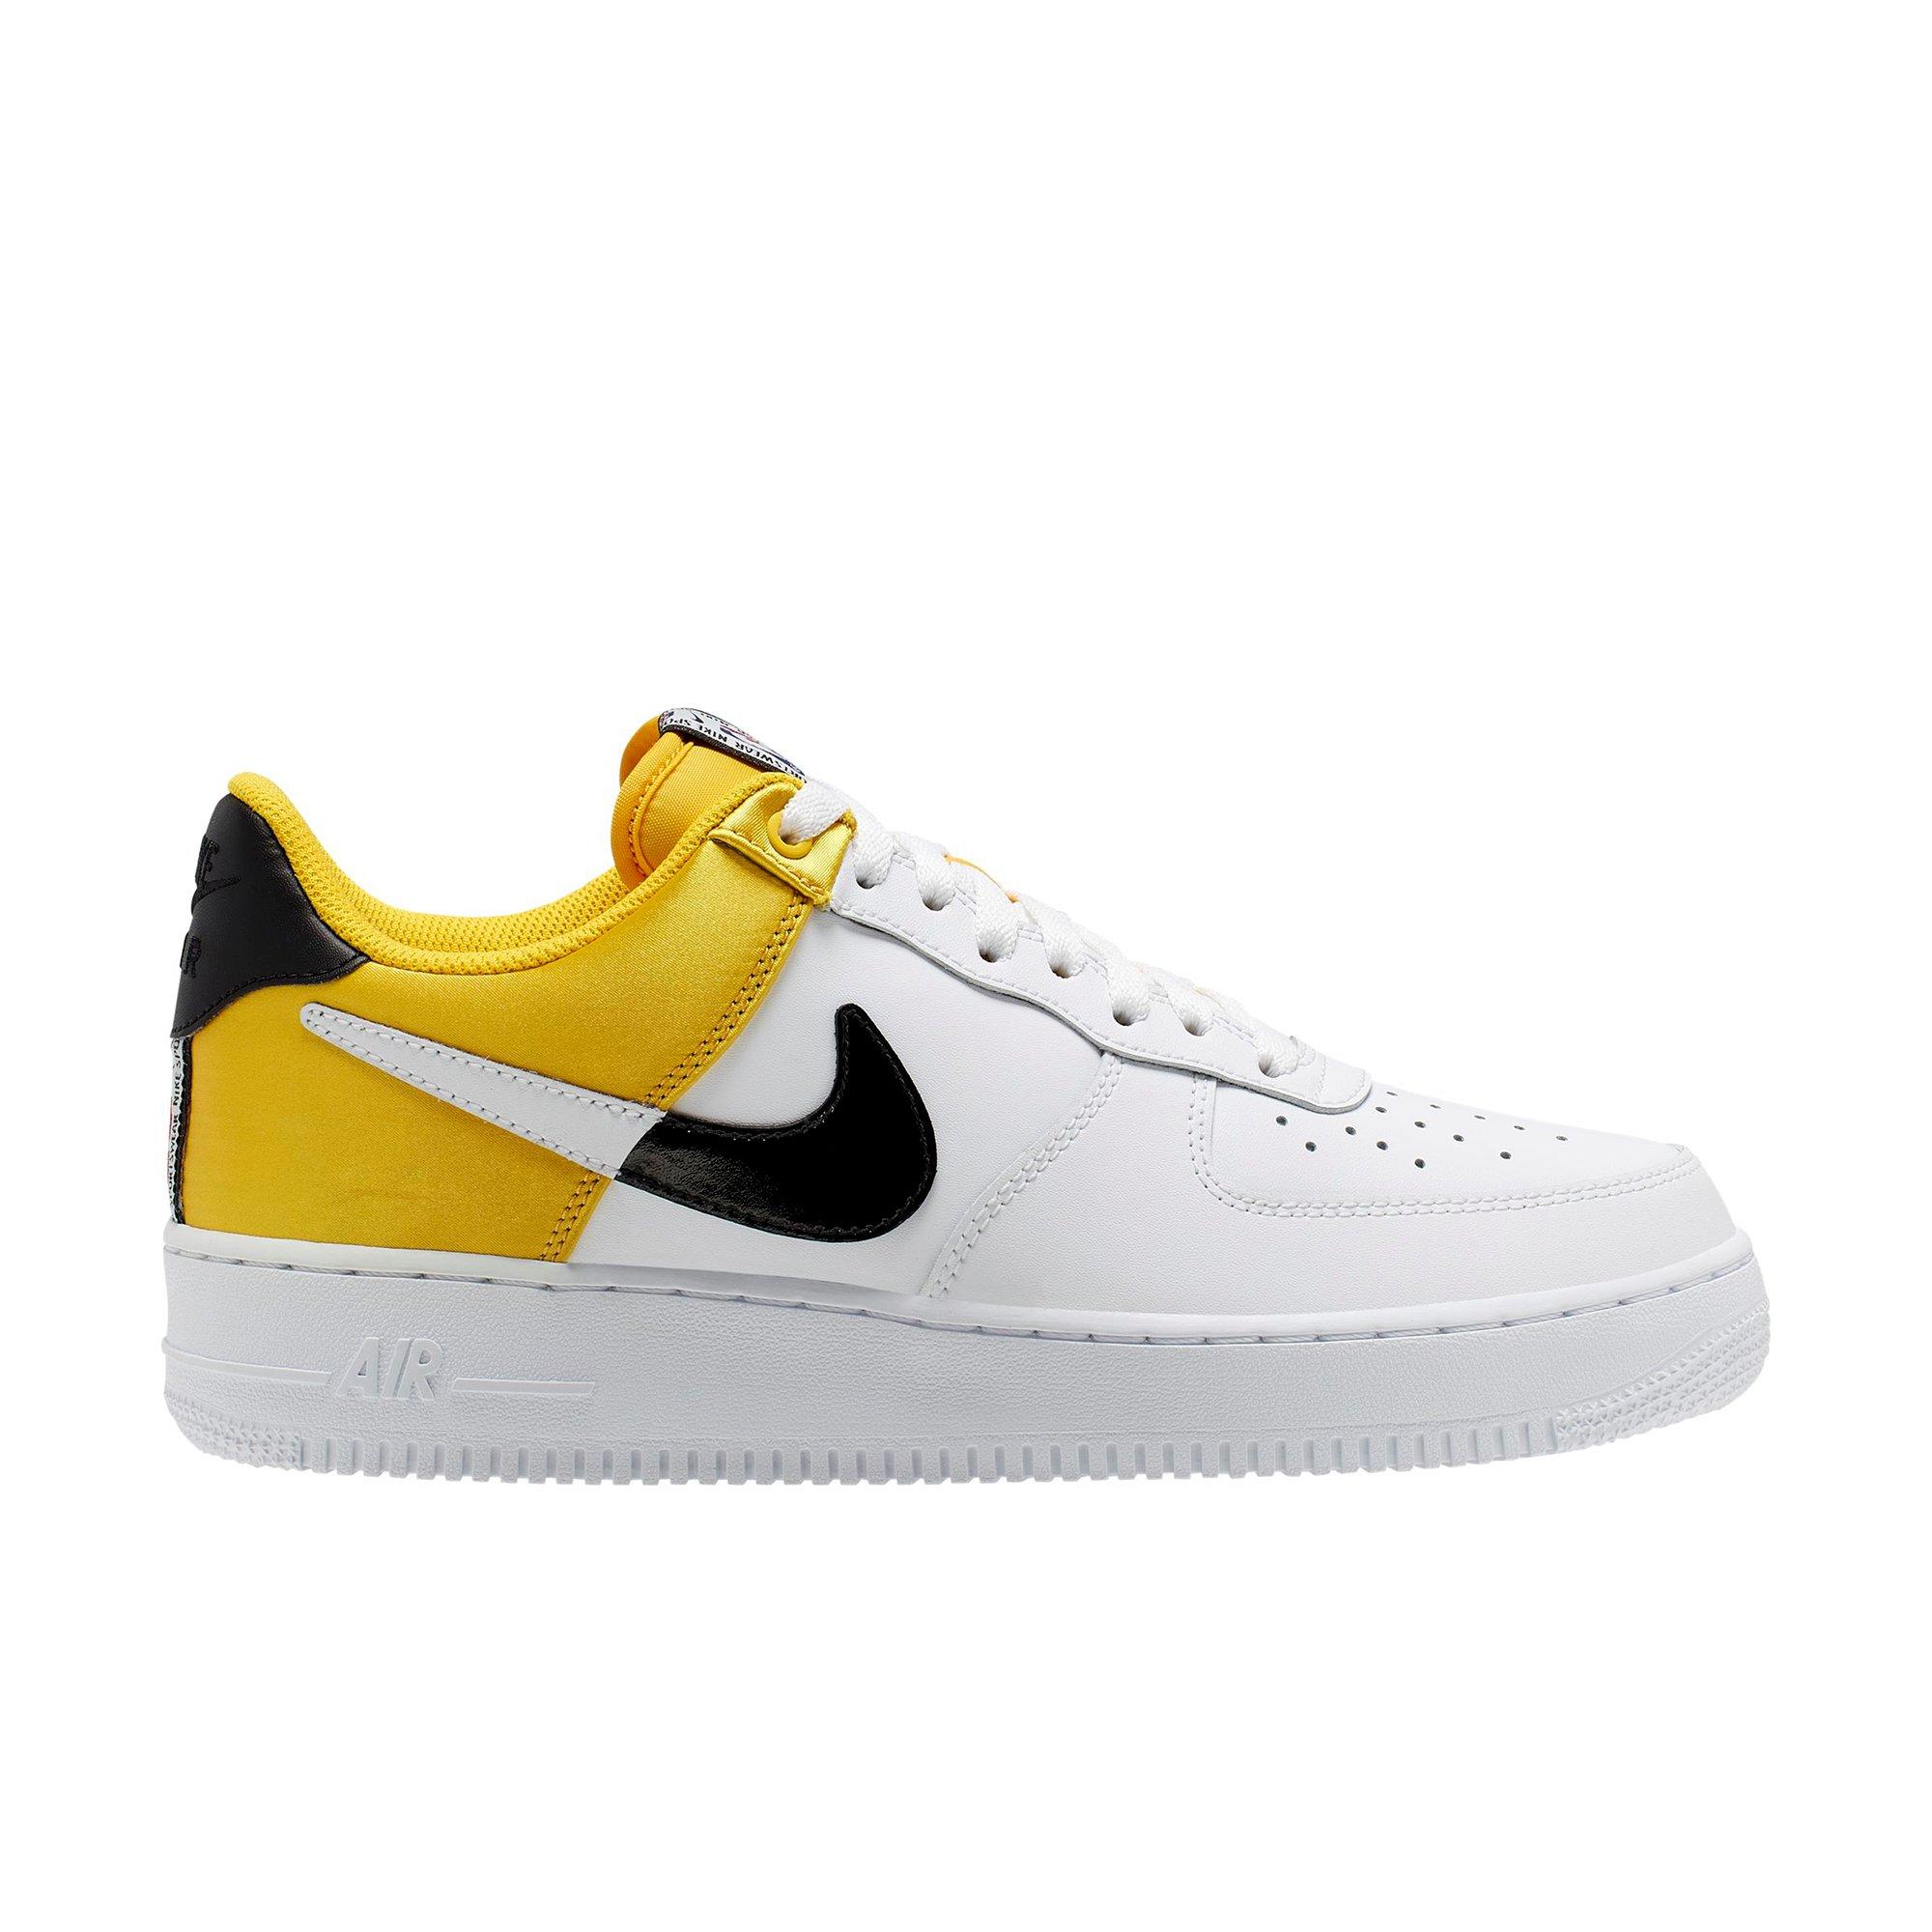 Nike Force 1 '07 "Yellow/Black/White" Men's Shoe